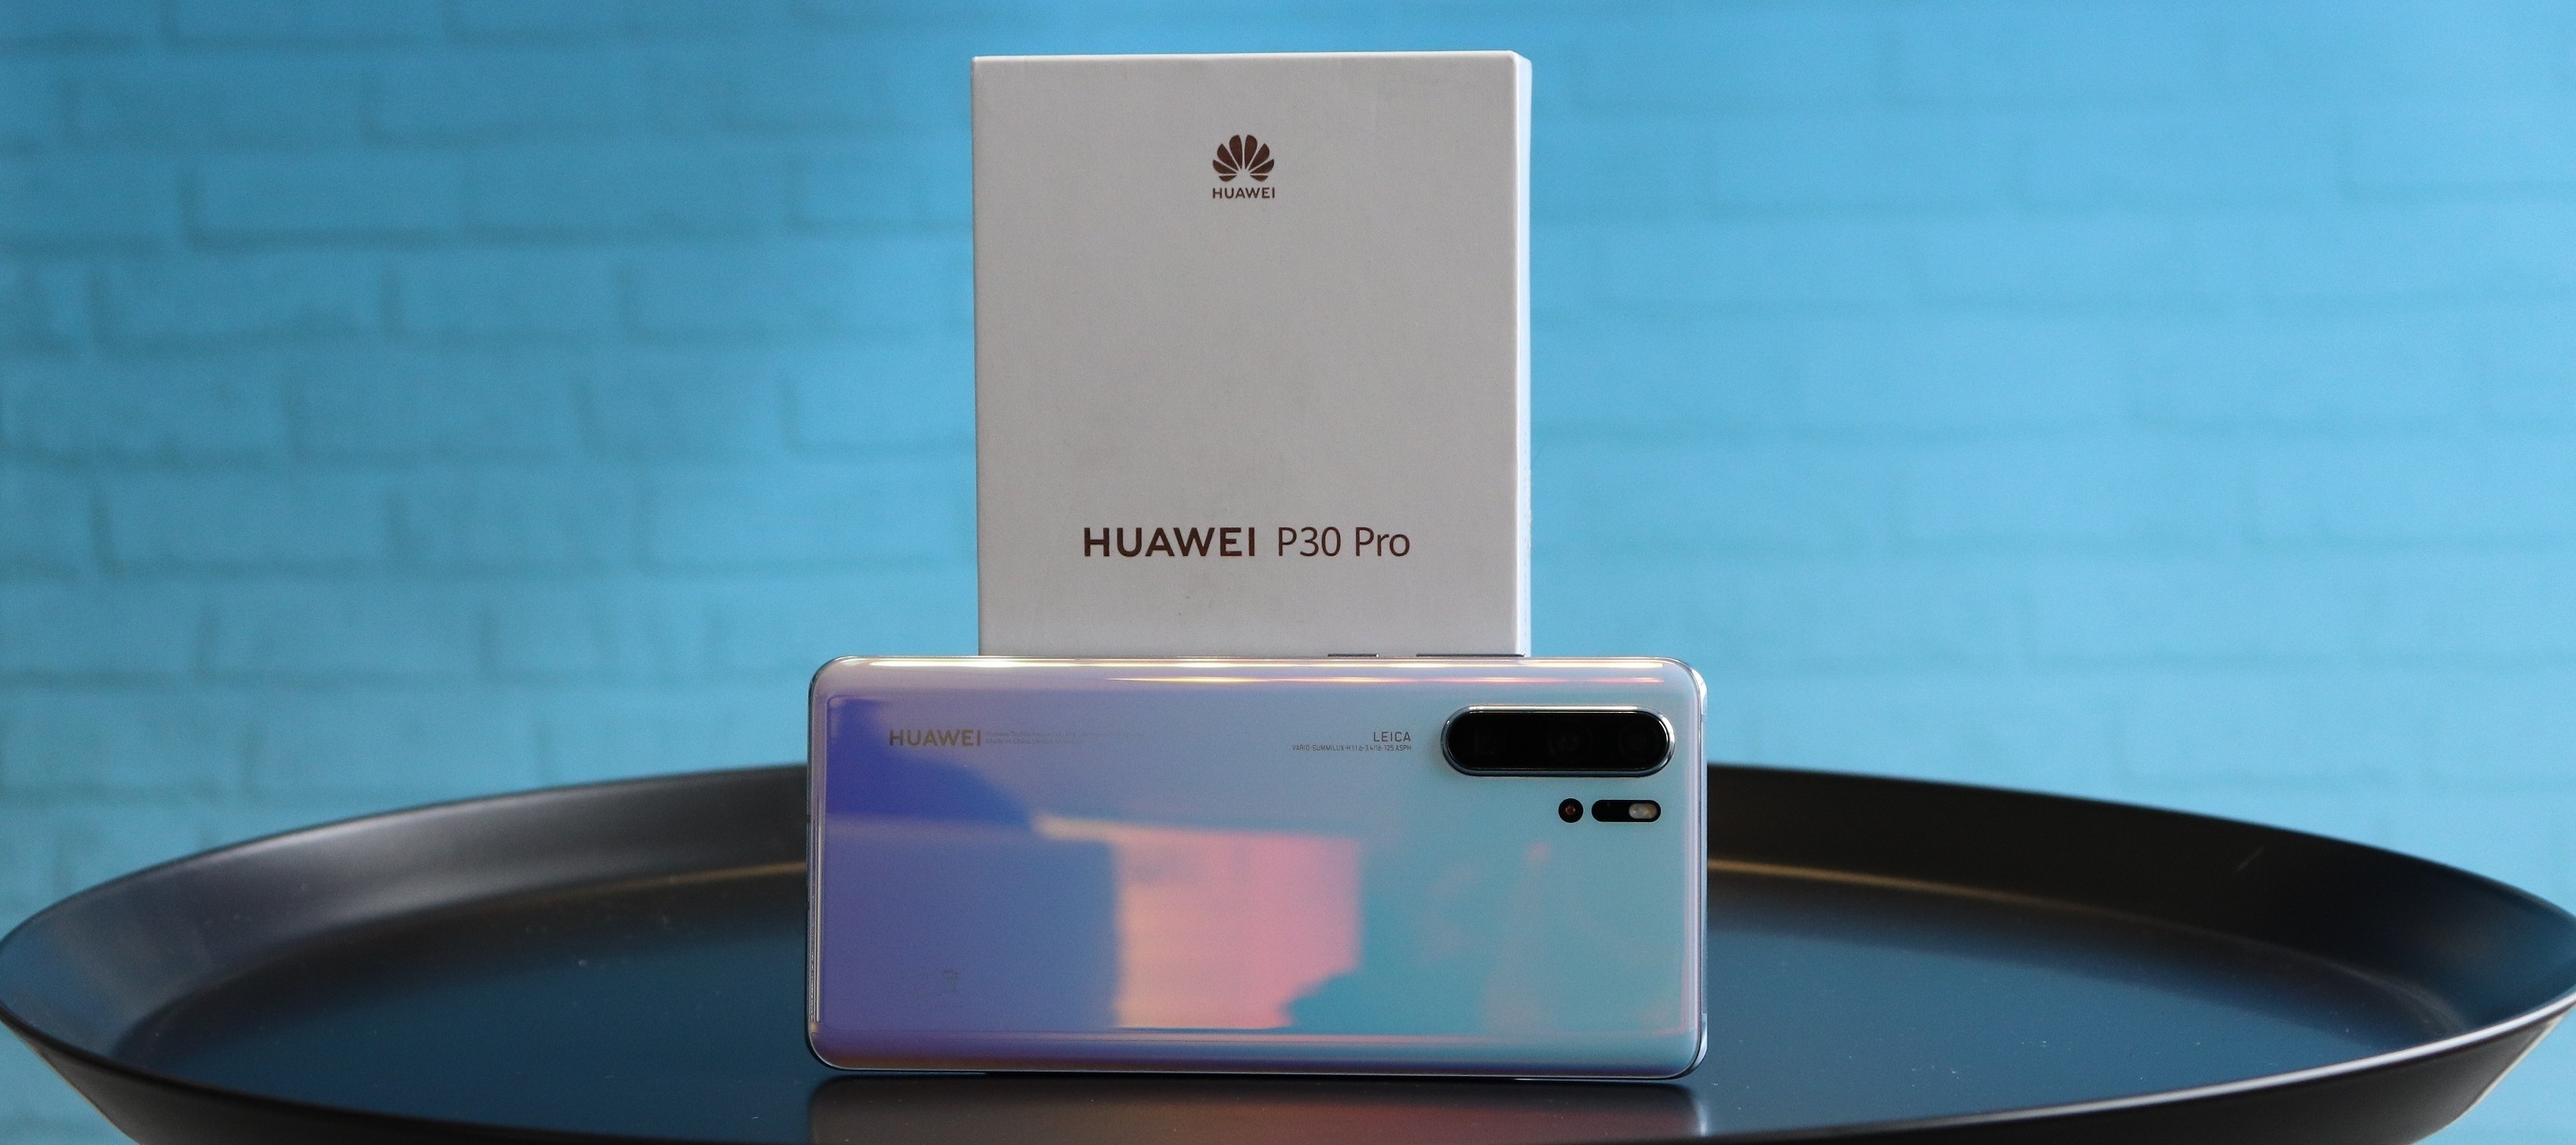 Huawei P30 Pro. Teste jetzt das High-End-Smartphone.